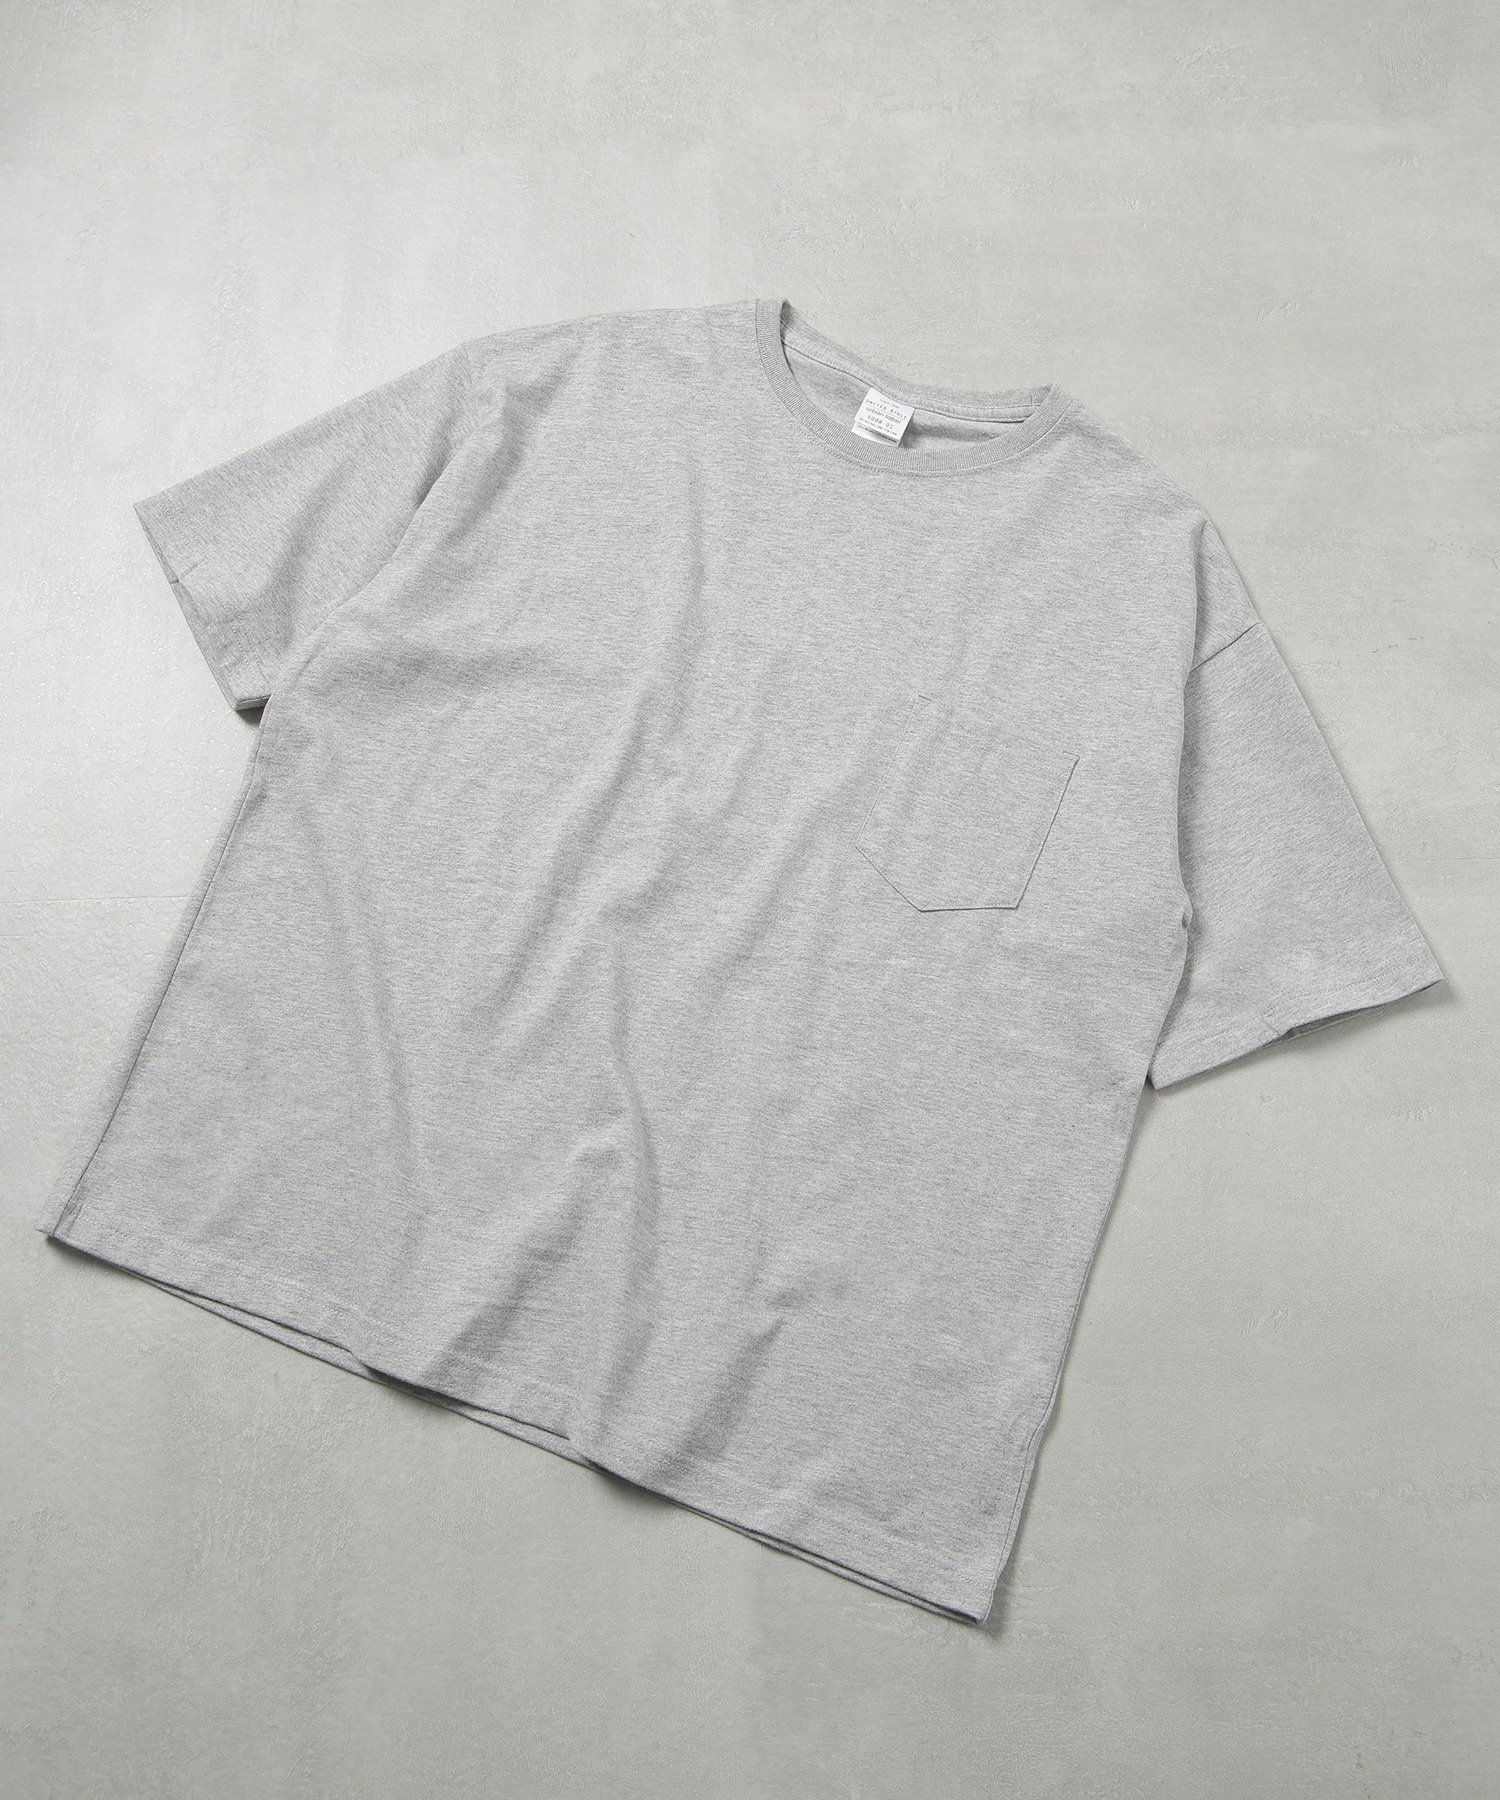 【UNITEDATHLE】ビッグシルエットポケットTシャツ5008